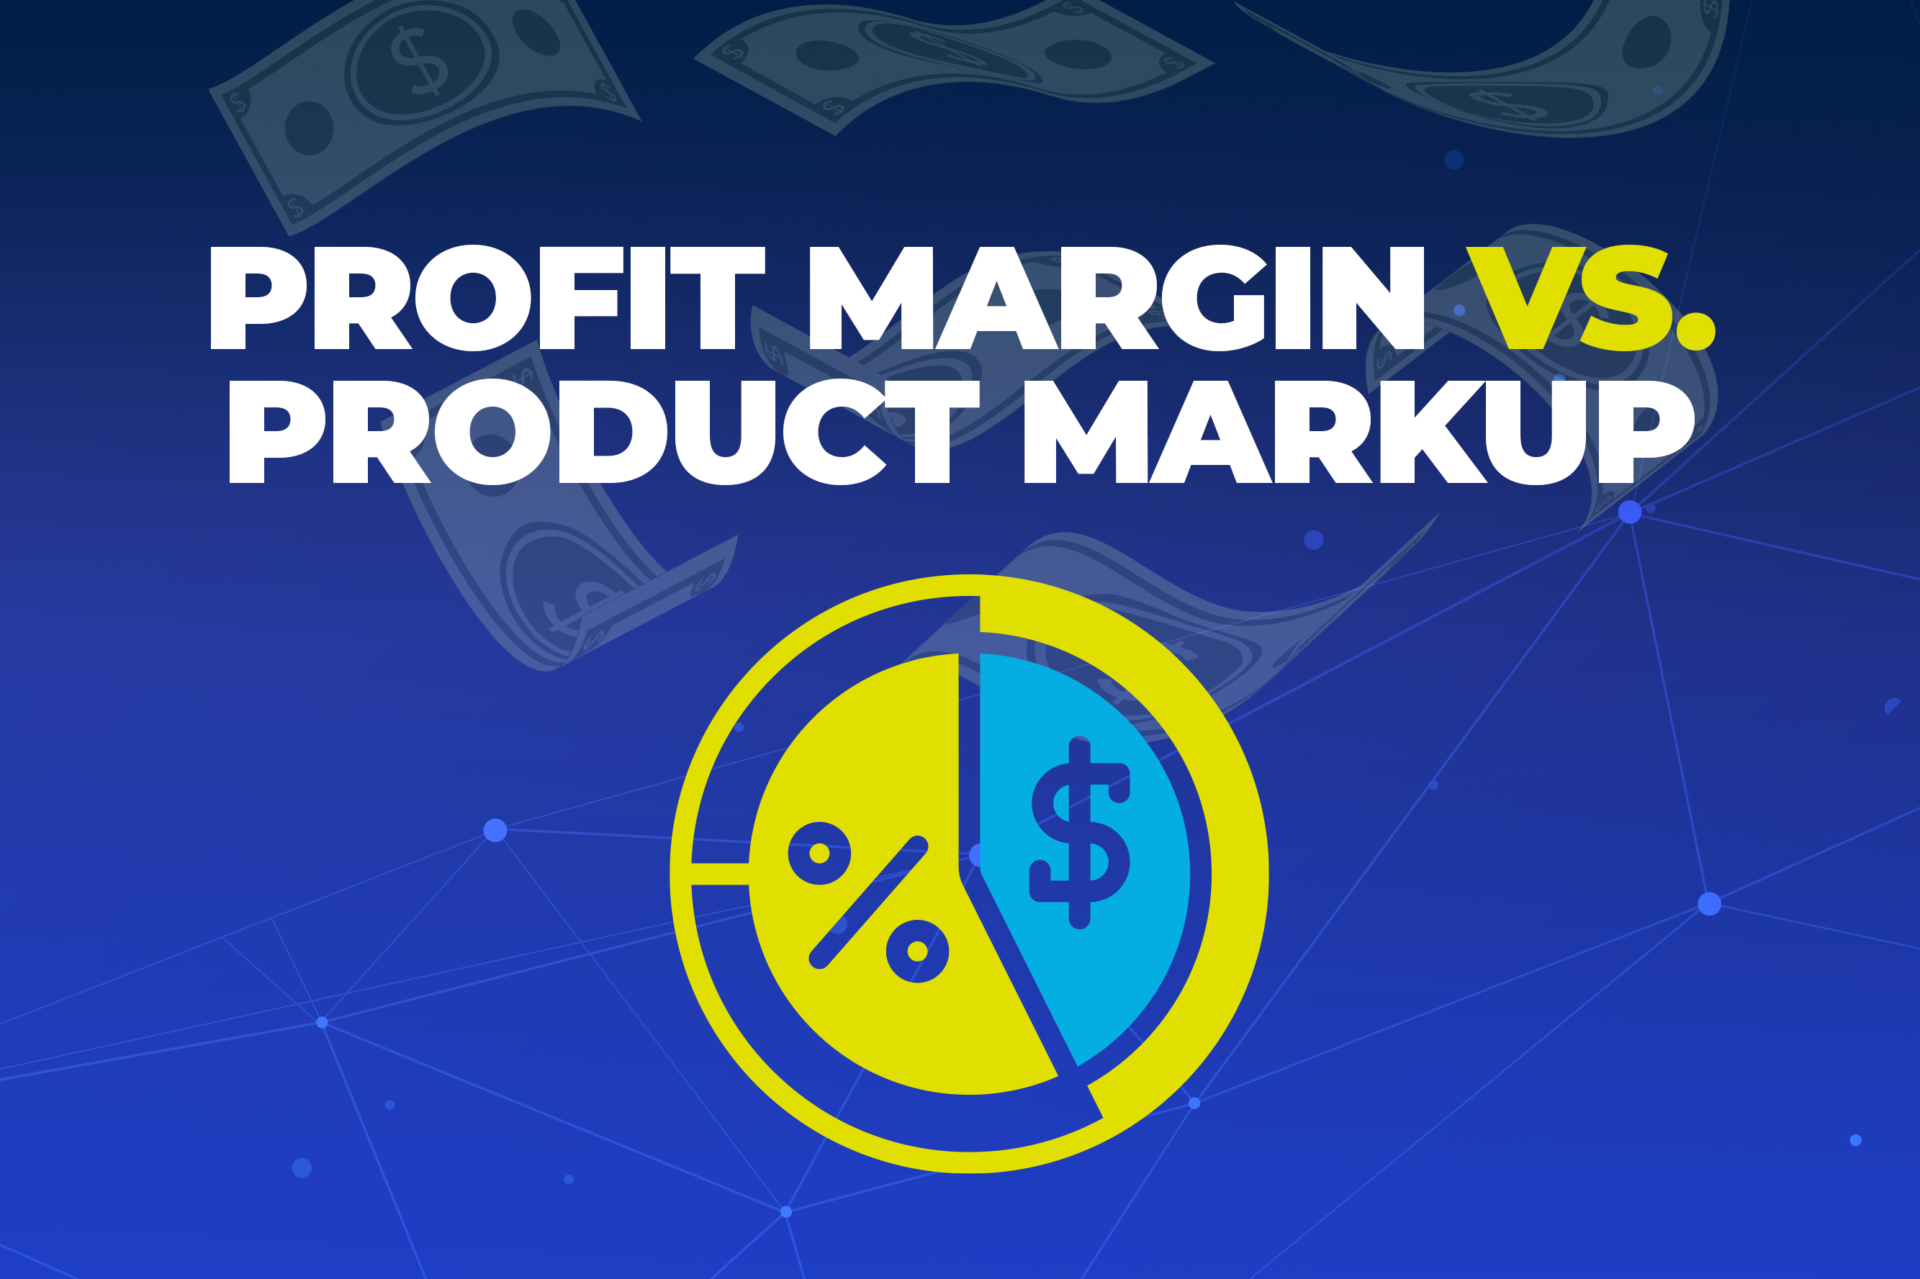 Profit Margin vs. Product Markup: Percentages to Profitability 